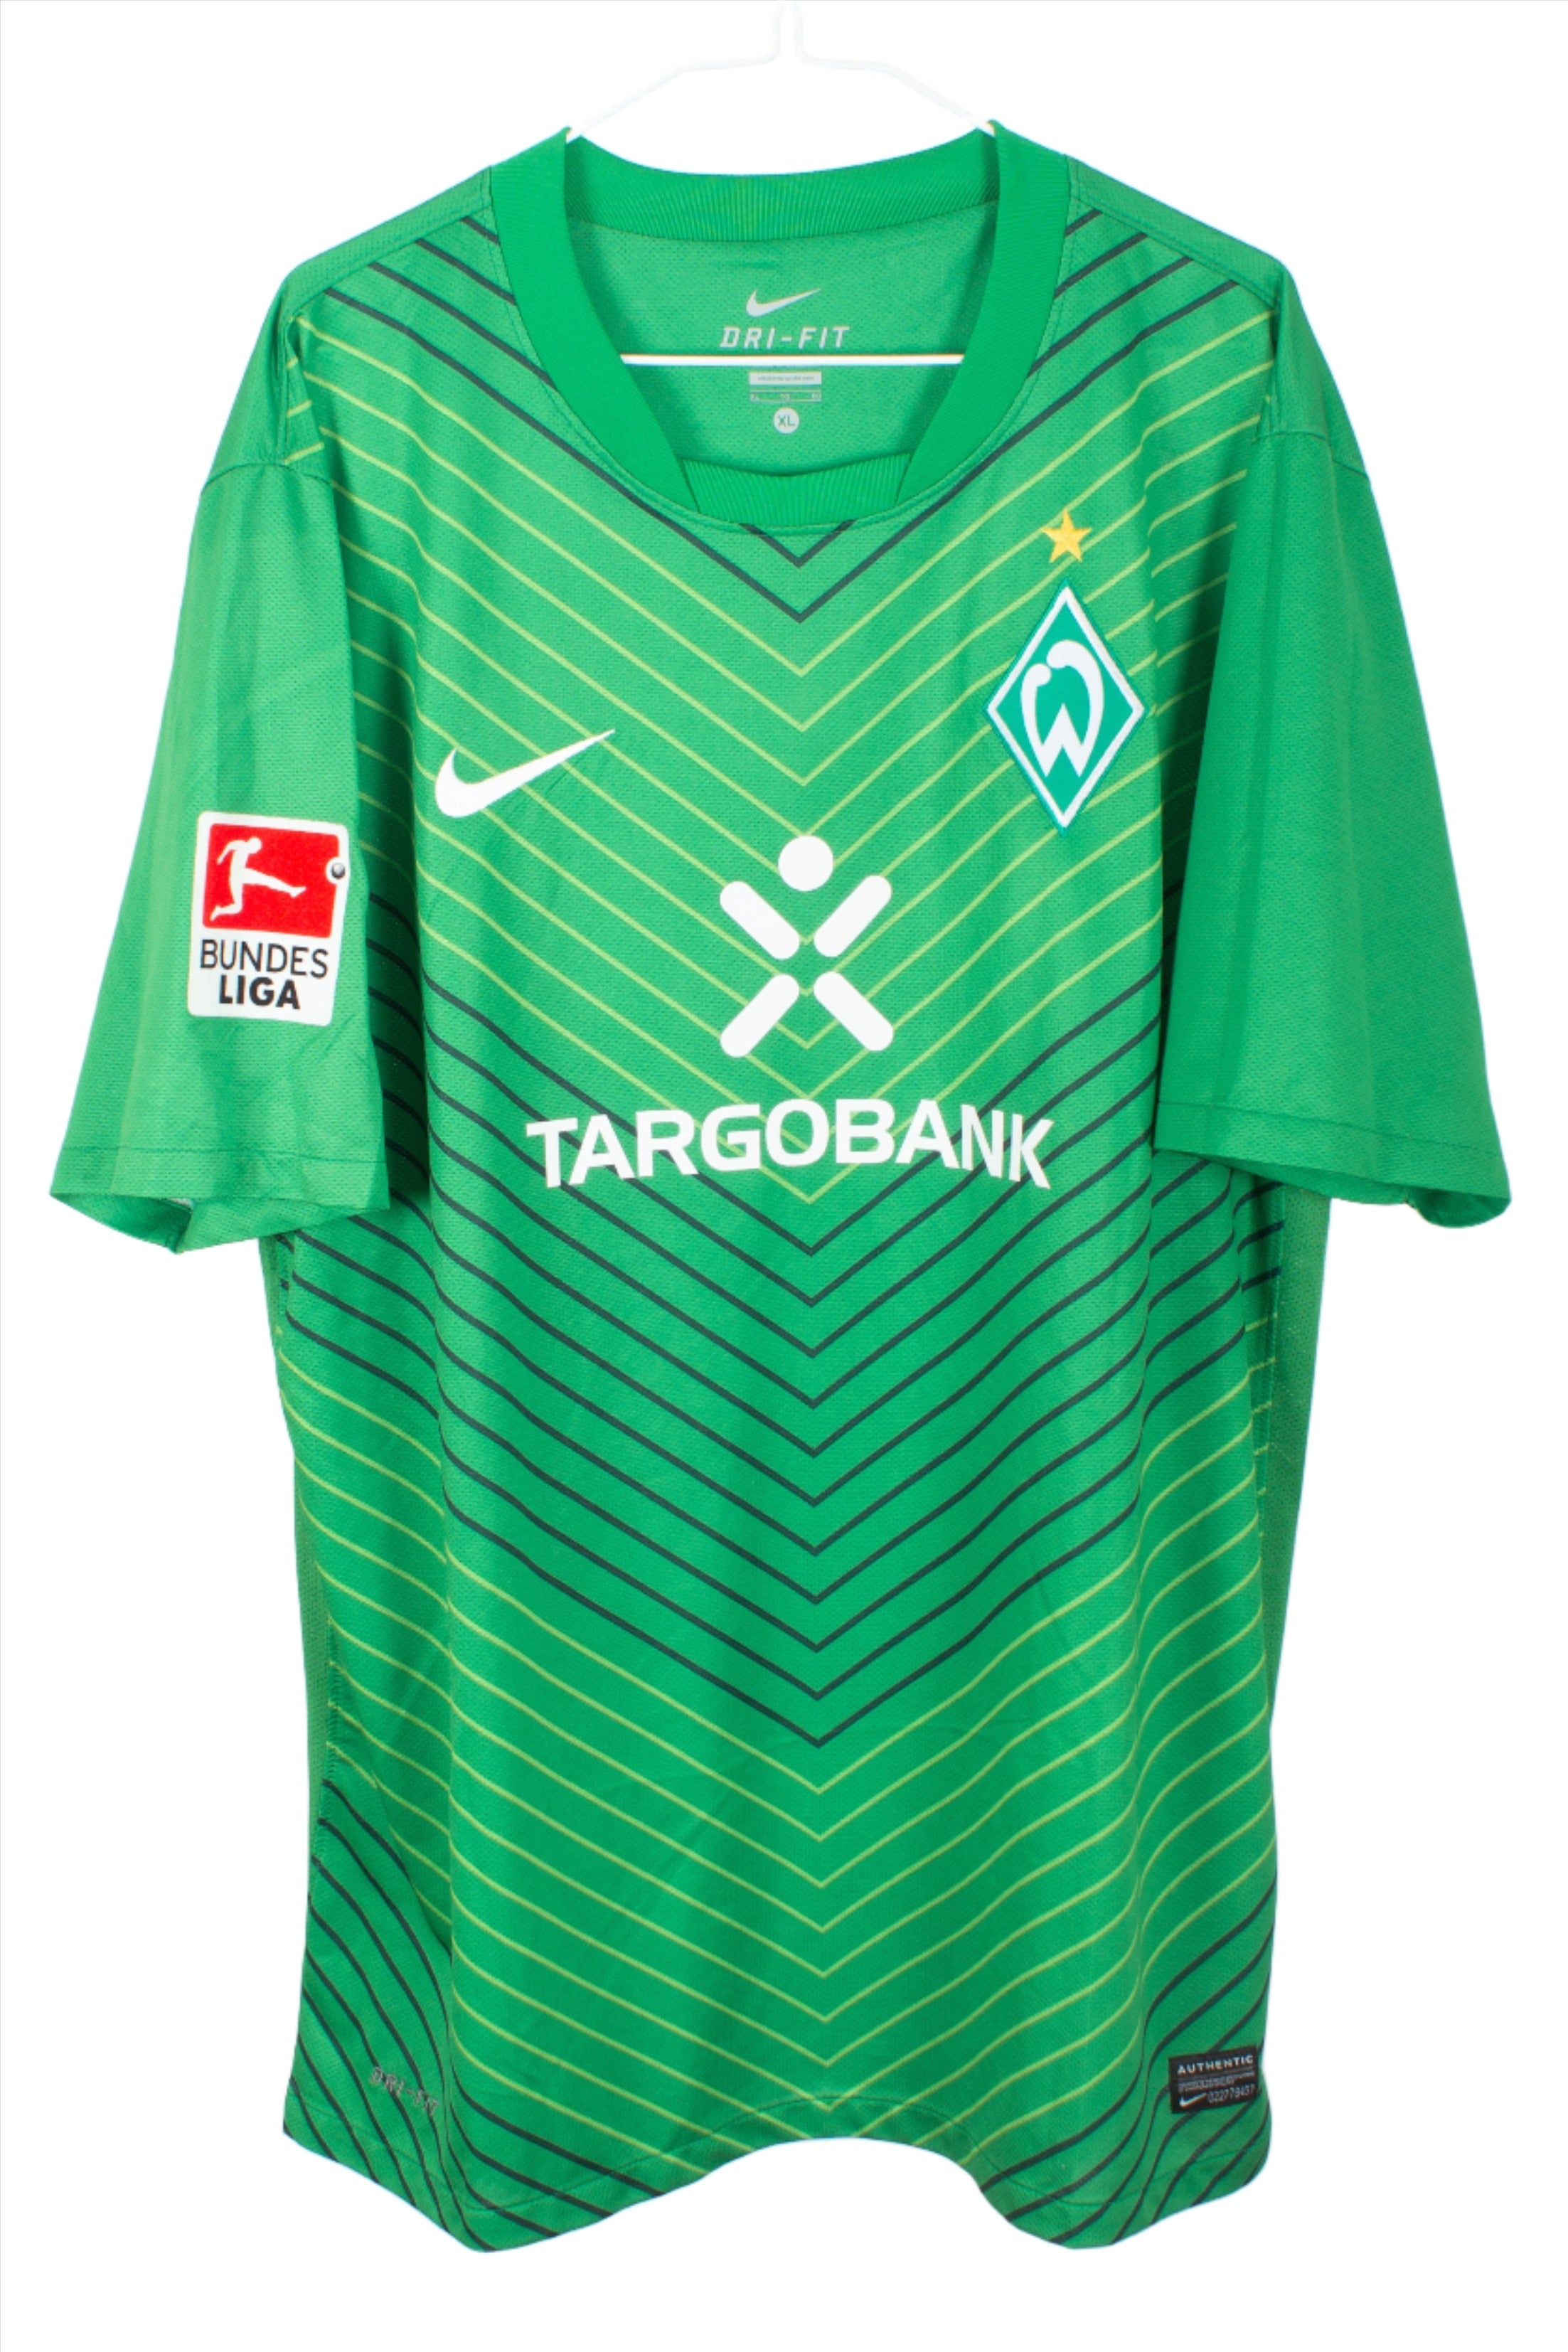 Werder Bremen 2011/12 Home Shirt (Pizarro #24) (XL)